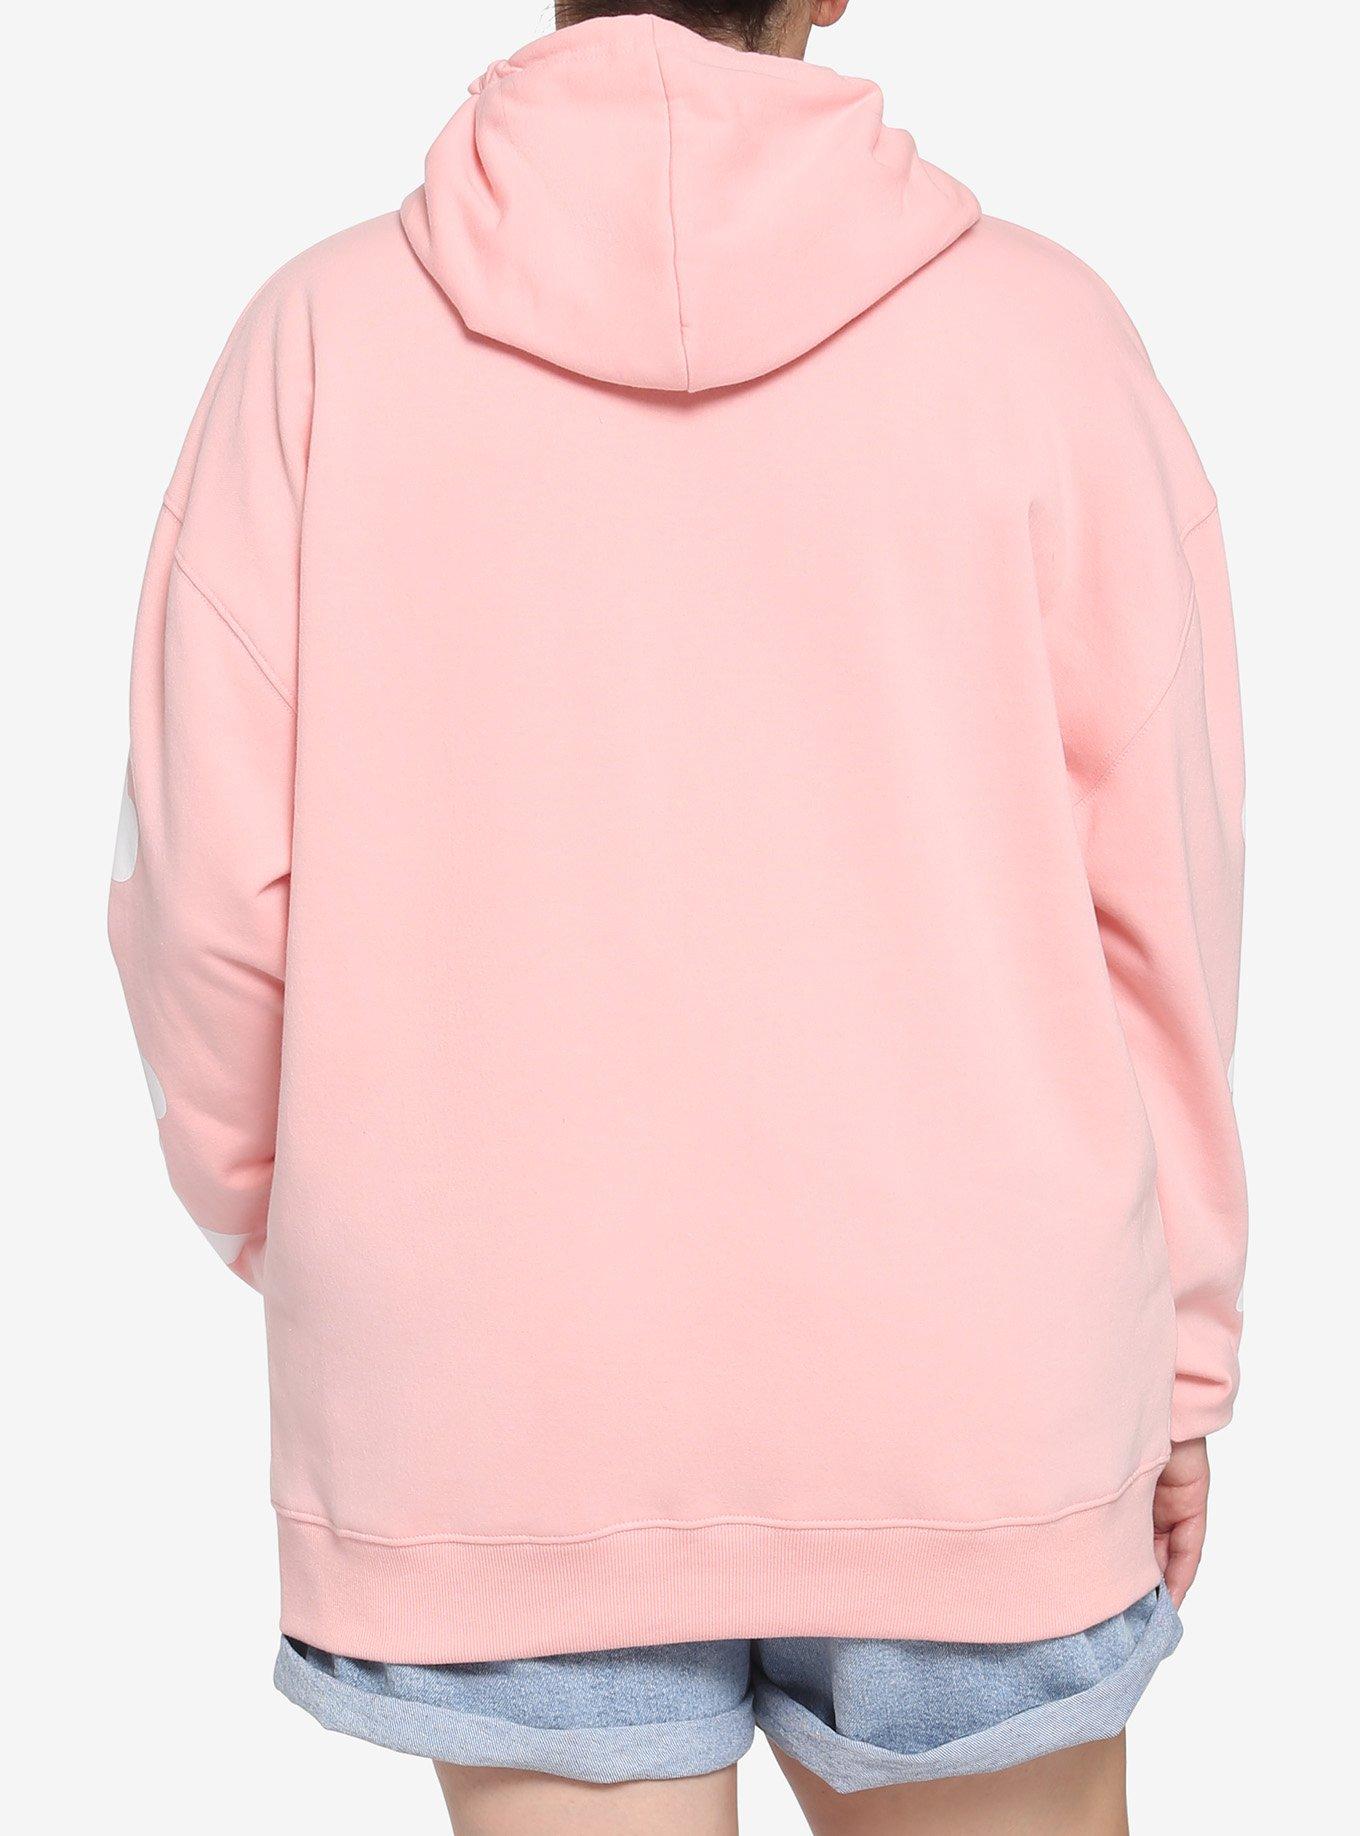 Clouds Pastel Pink Girls Hoodie Plus Size, PINK, alternate